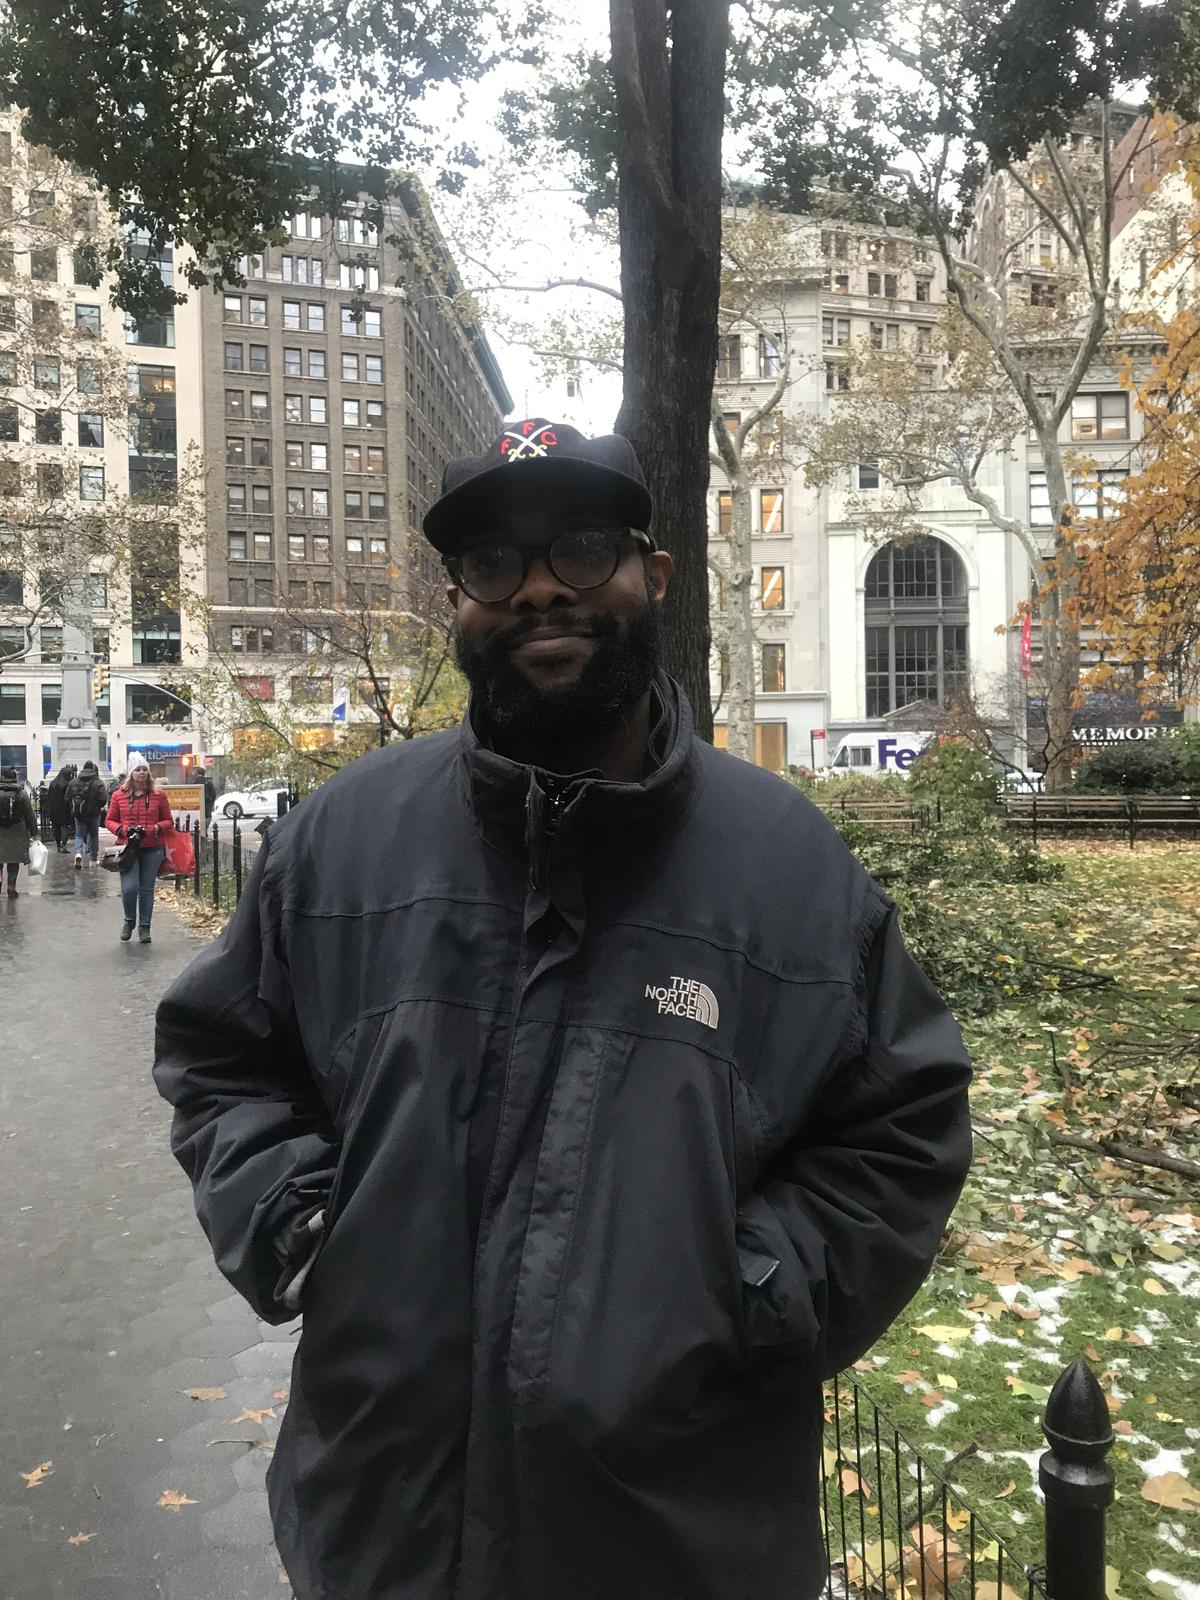 Ryan Jonhson in Madison Square Park, New York, on Nov. 16, 2018. (Stuart Liess/The Epoch Times)